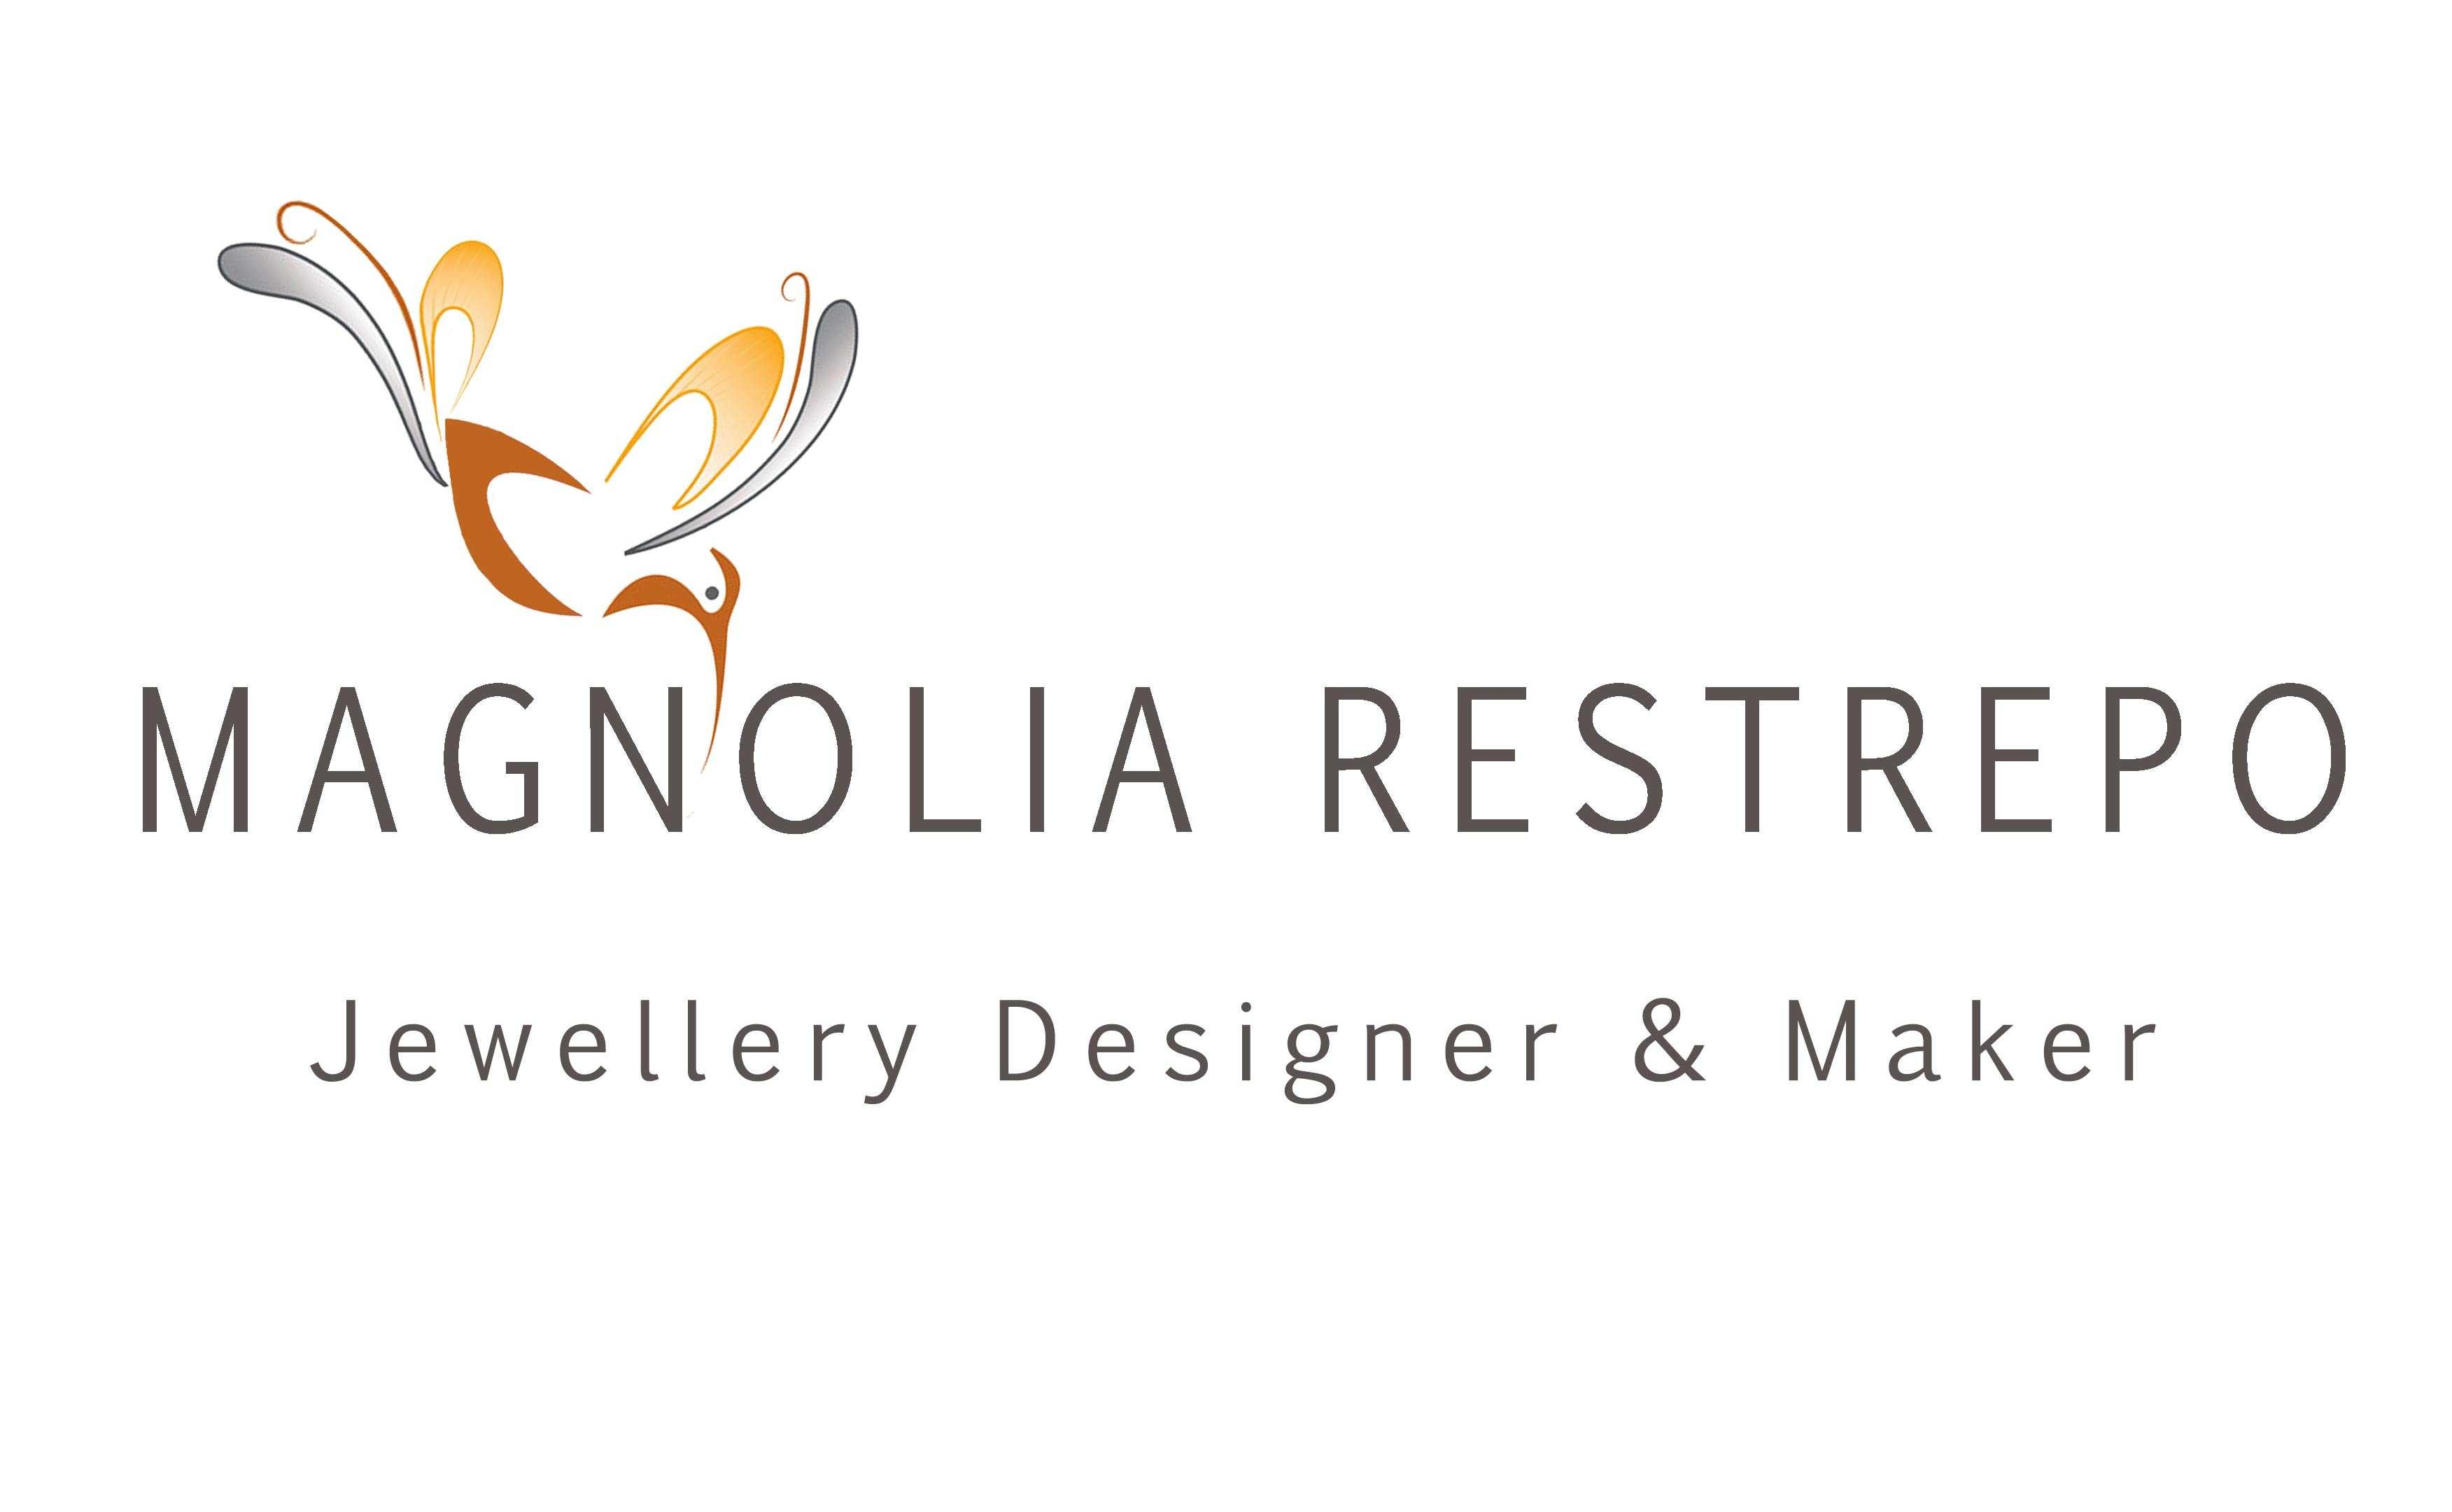 Magnolia Restrepo Jewellery